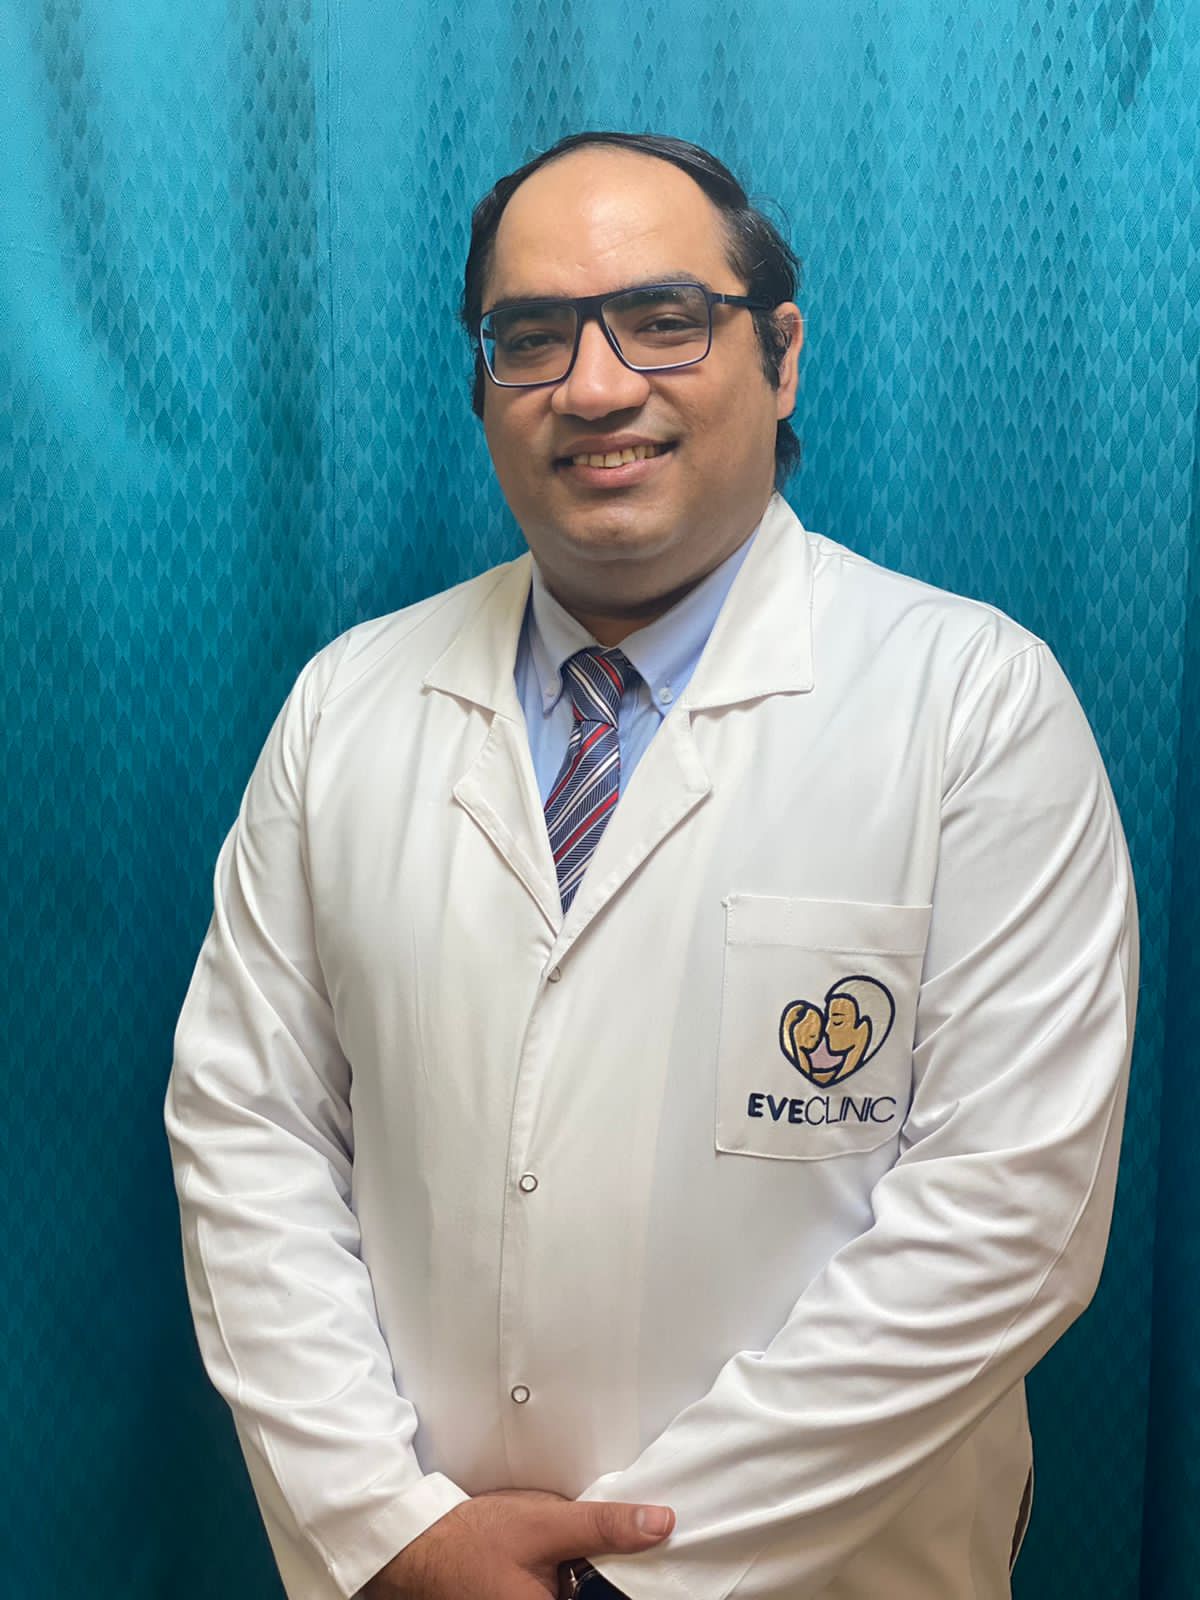 Dr. Mohamed Fathalla Mohamed